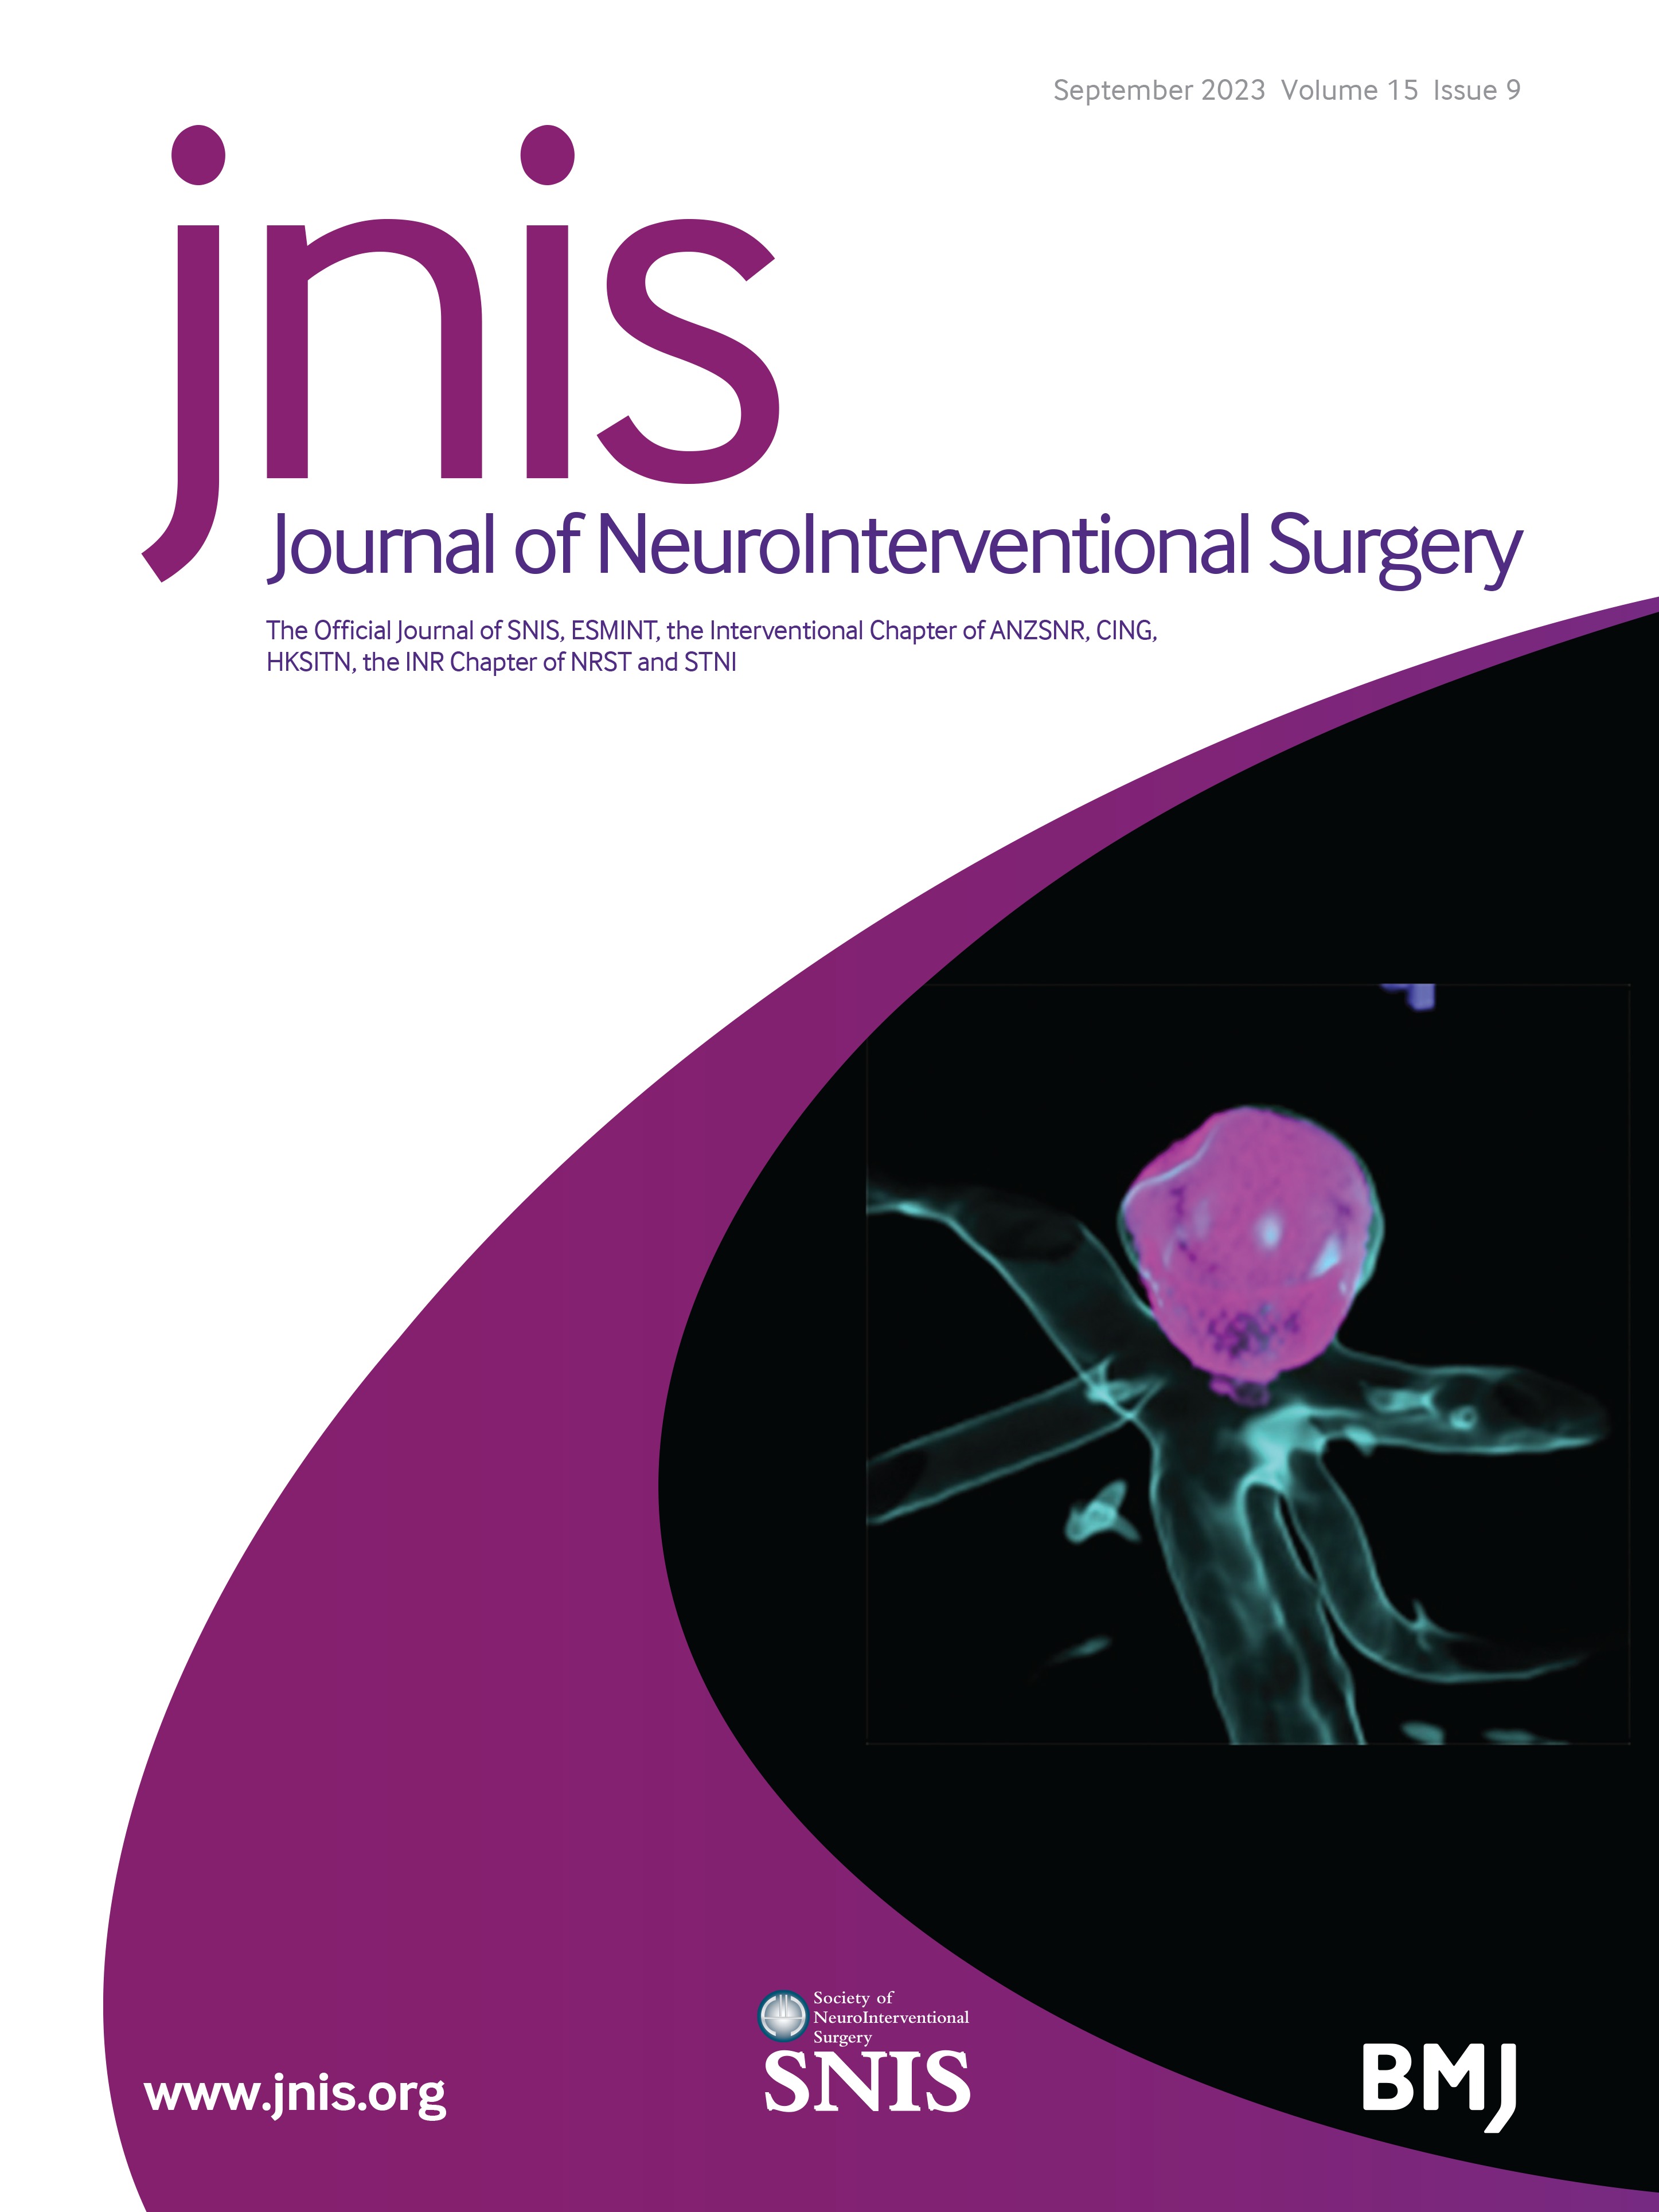 Correspondence on "Natural history, angiographic presentation and outcome of anterior cranial fossa dural arteriovenous fistulas" by Sanchez et al